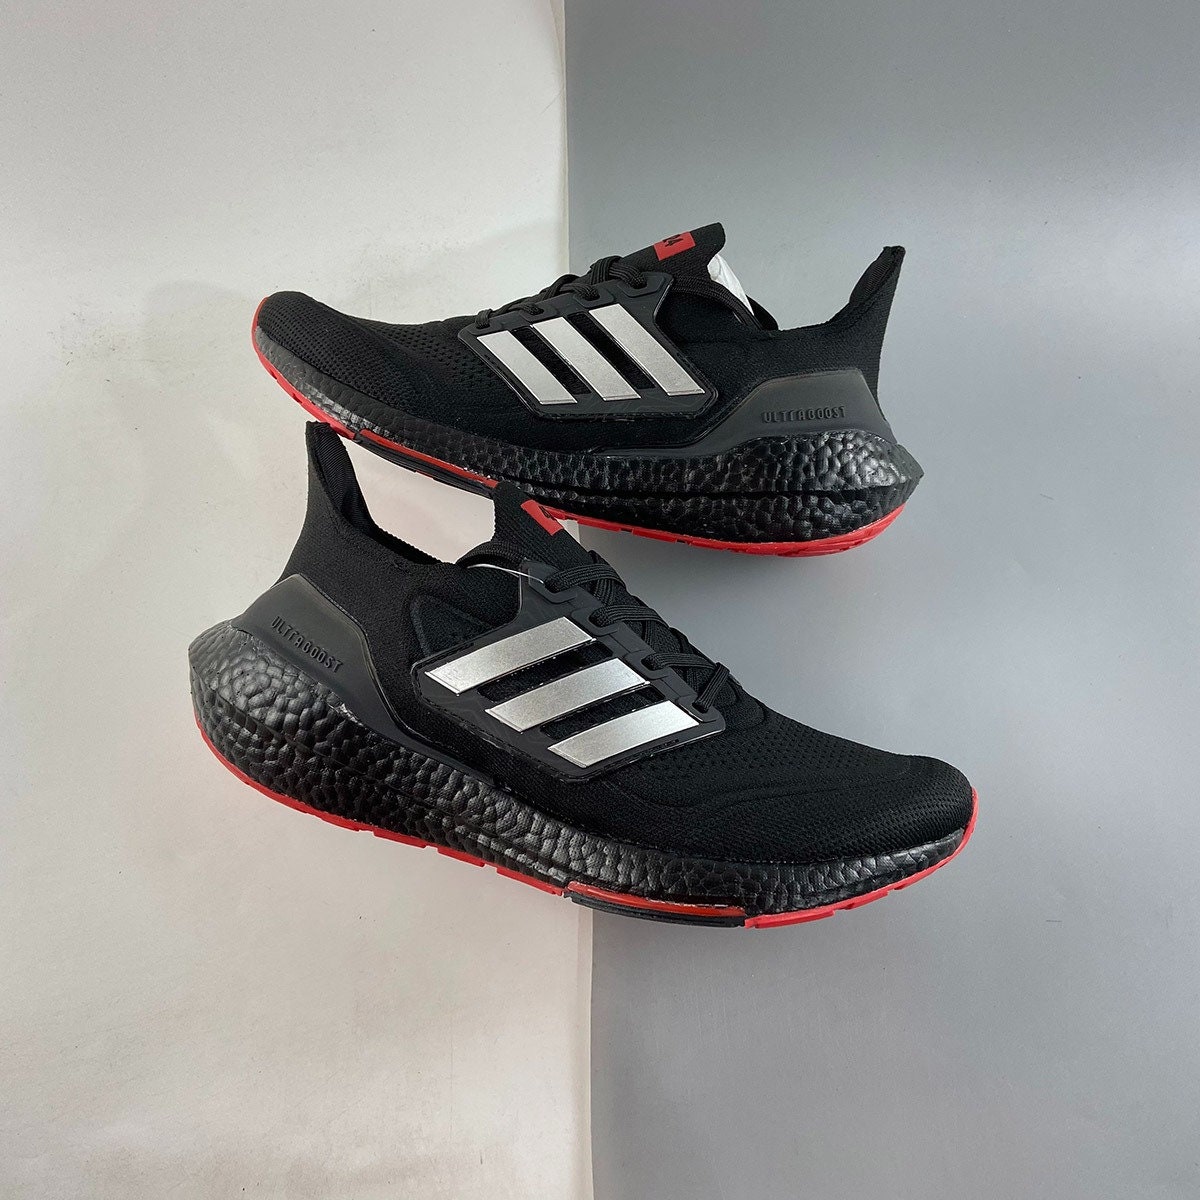 Custom Adidas Ultra Boost 3.0 Oreos! : r/Sneakers